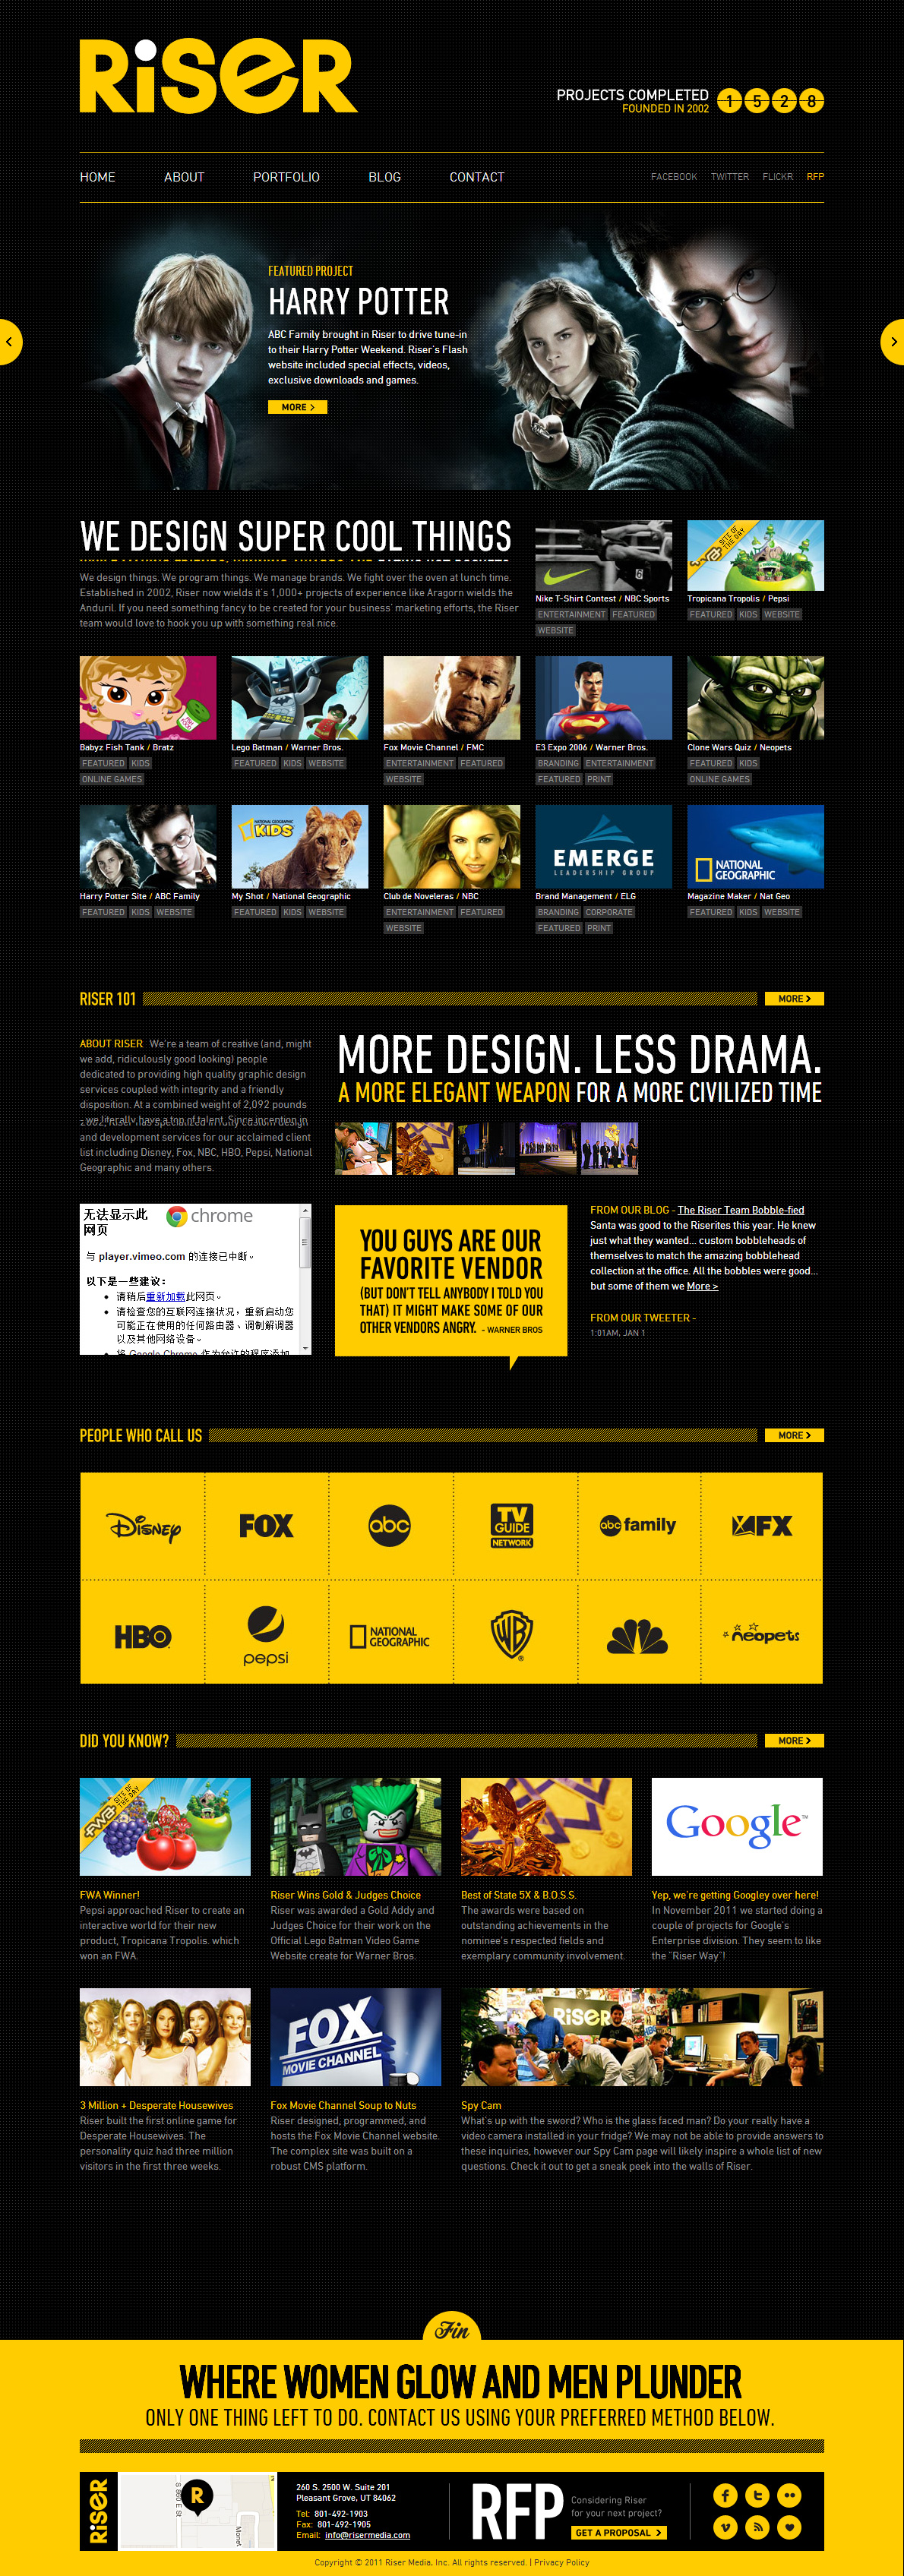 Riser Media是一家创意与设计机构。